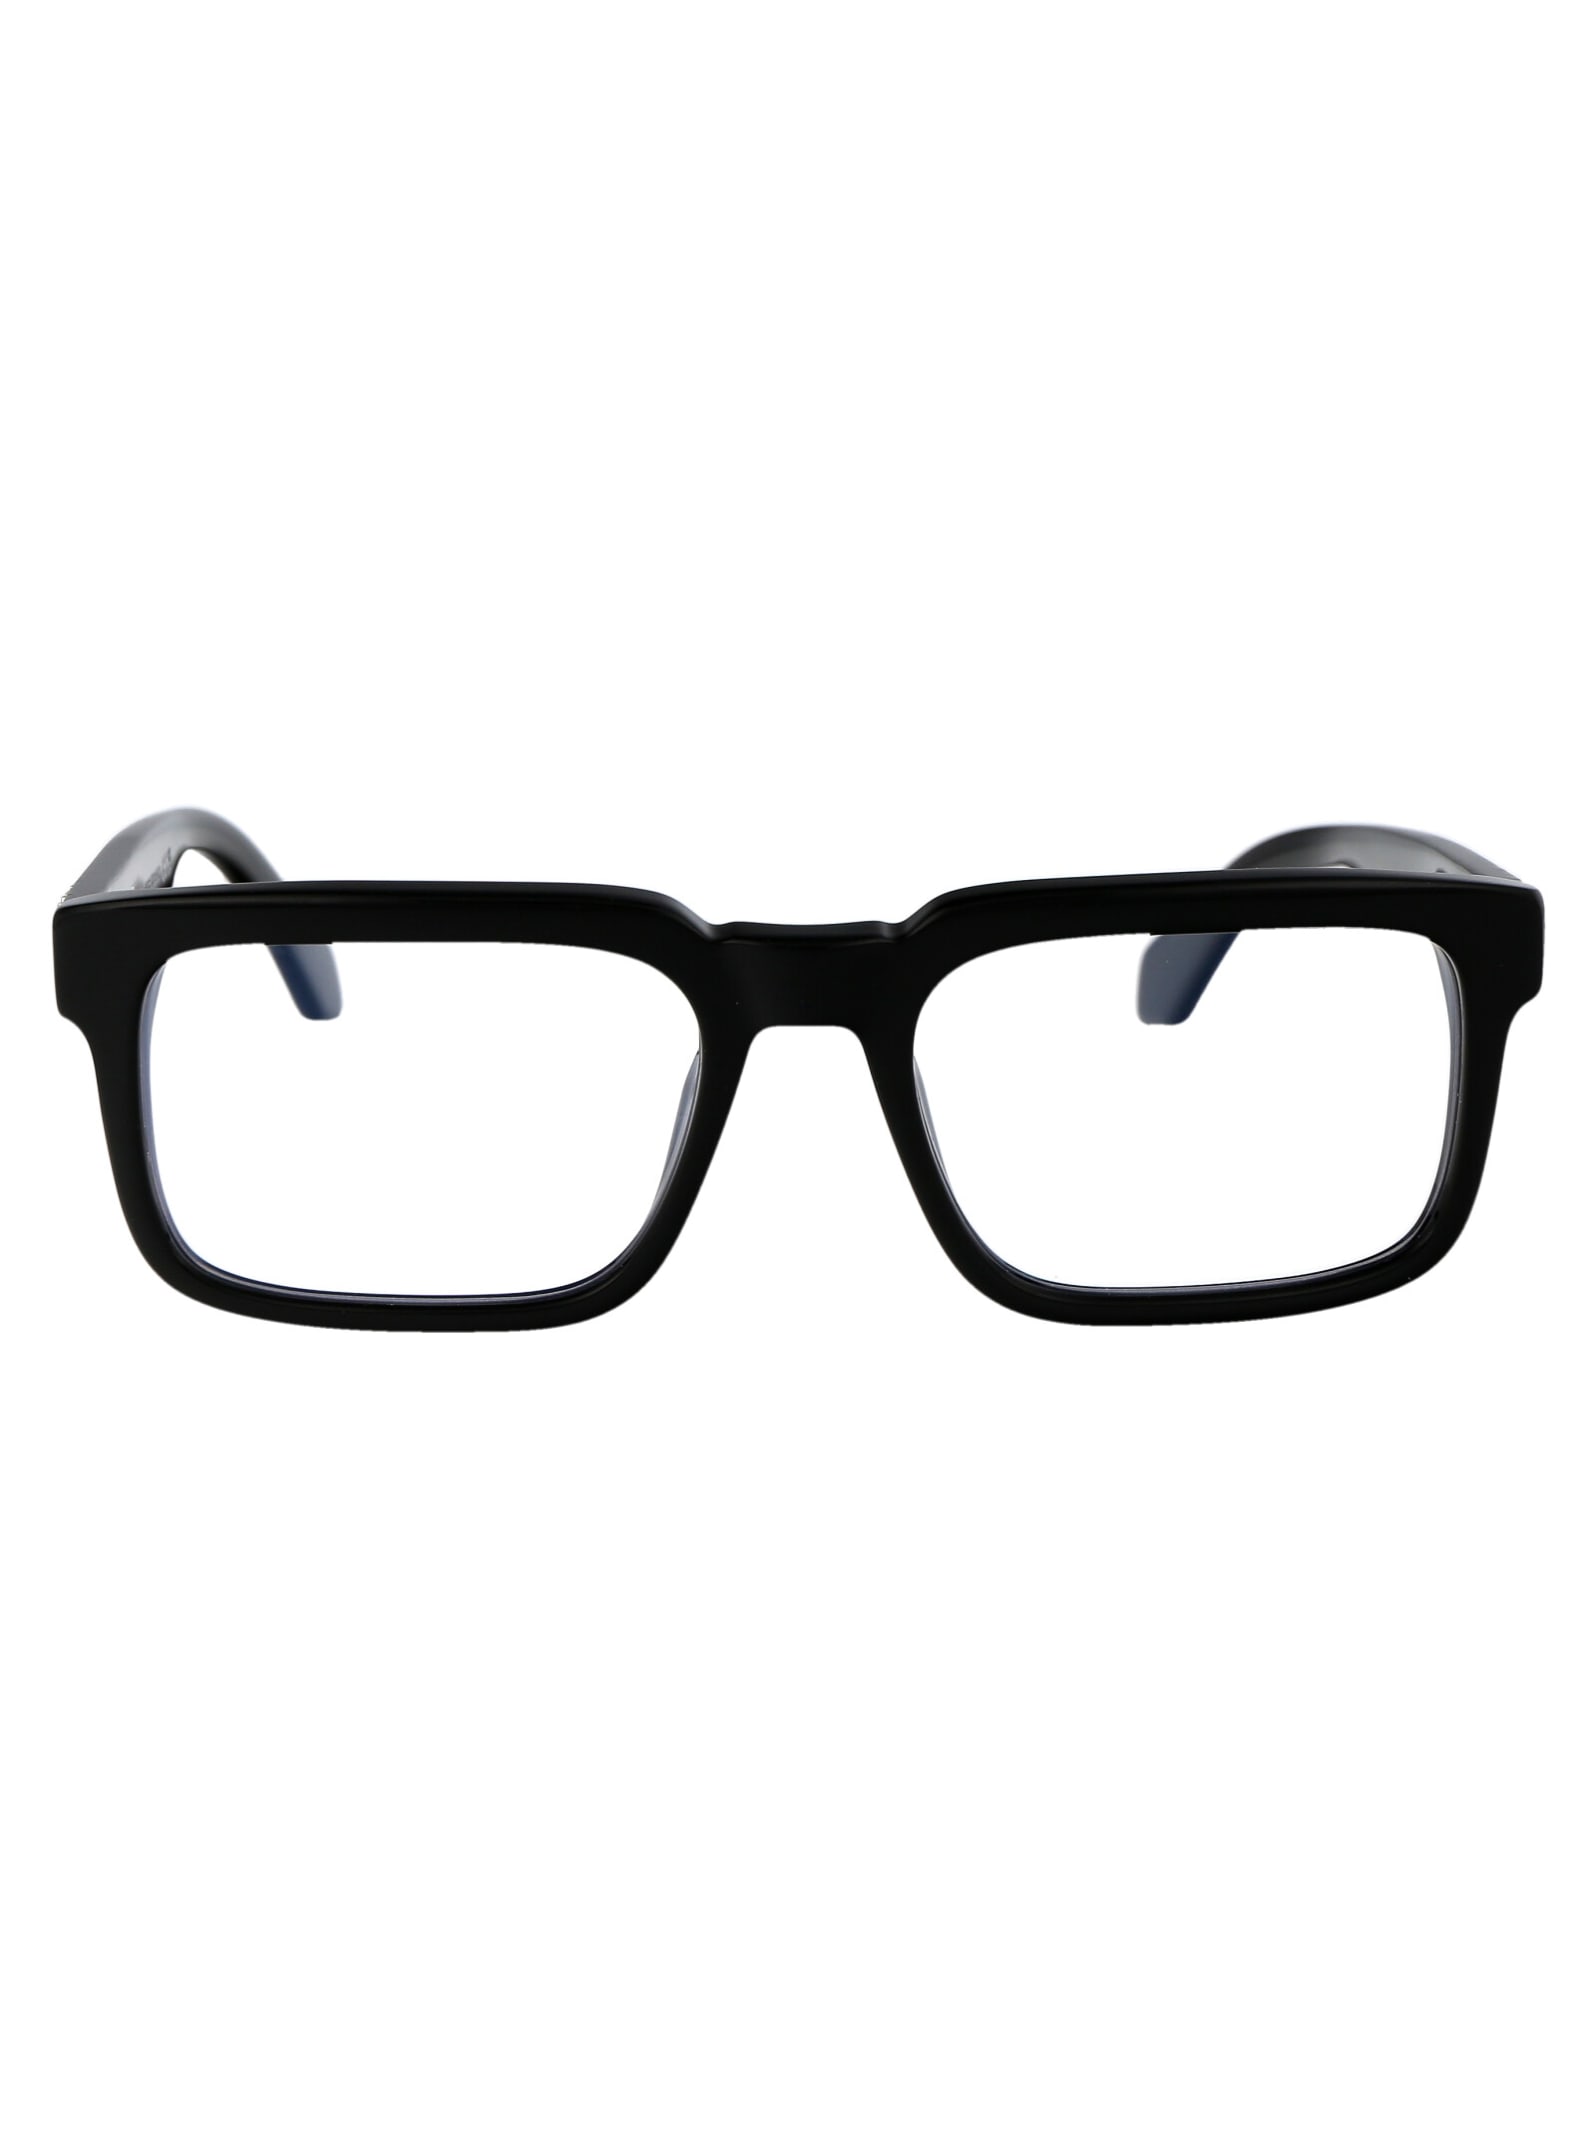 Optical Style 70 Glasses